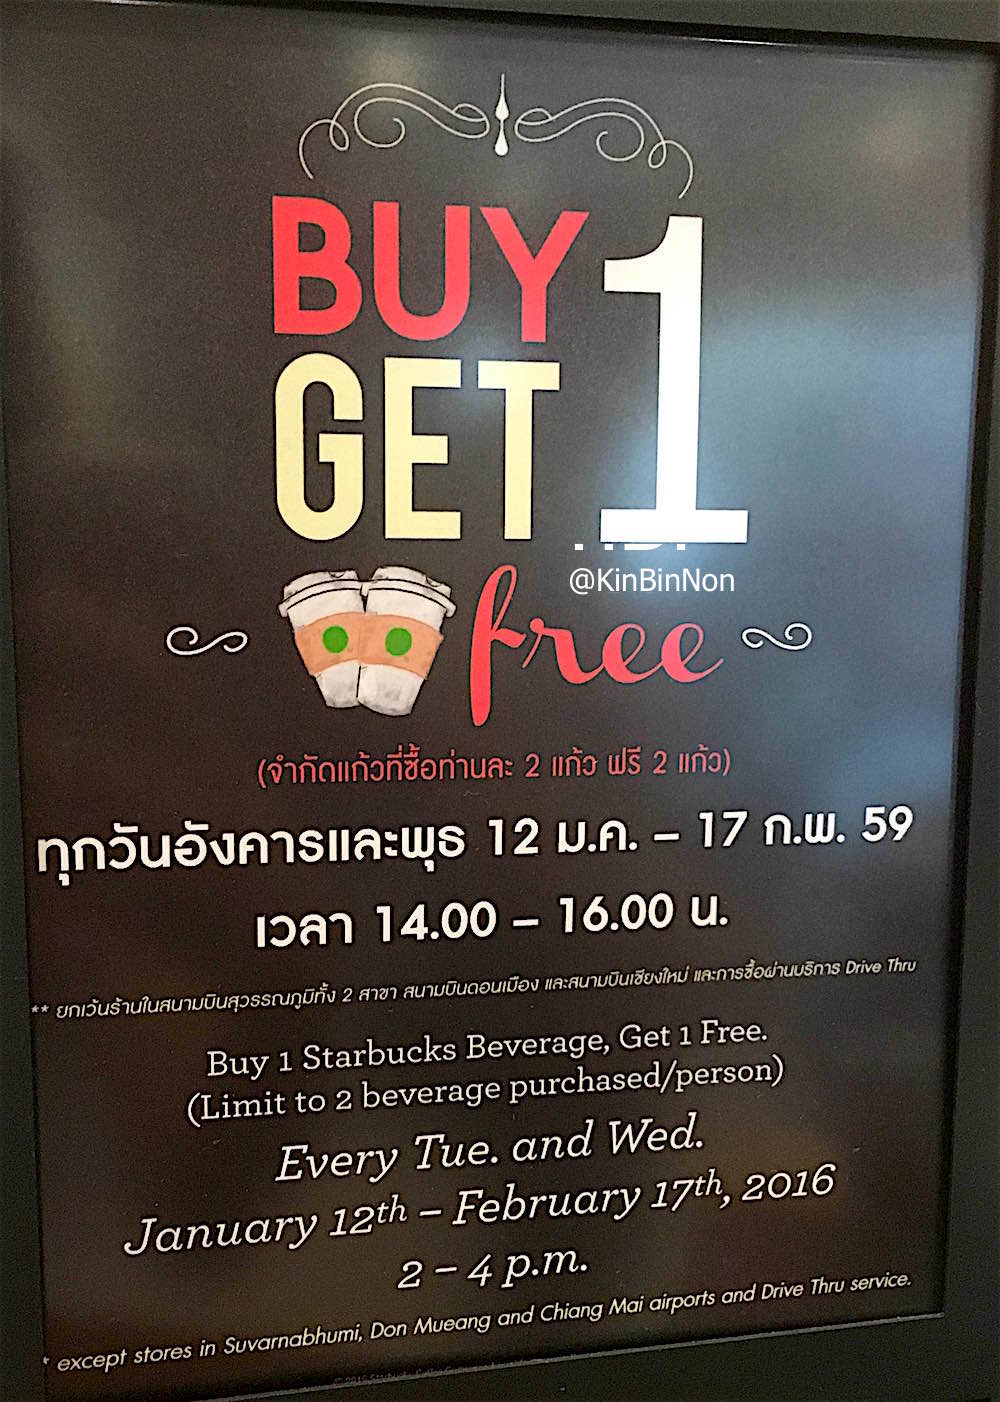 starbucks-thailand-buy-1-get-1-free-kinbinnon